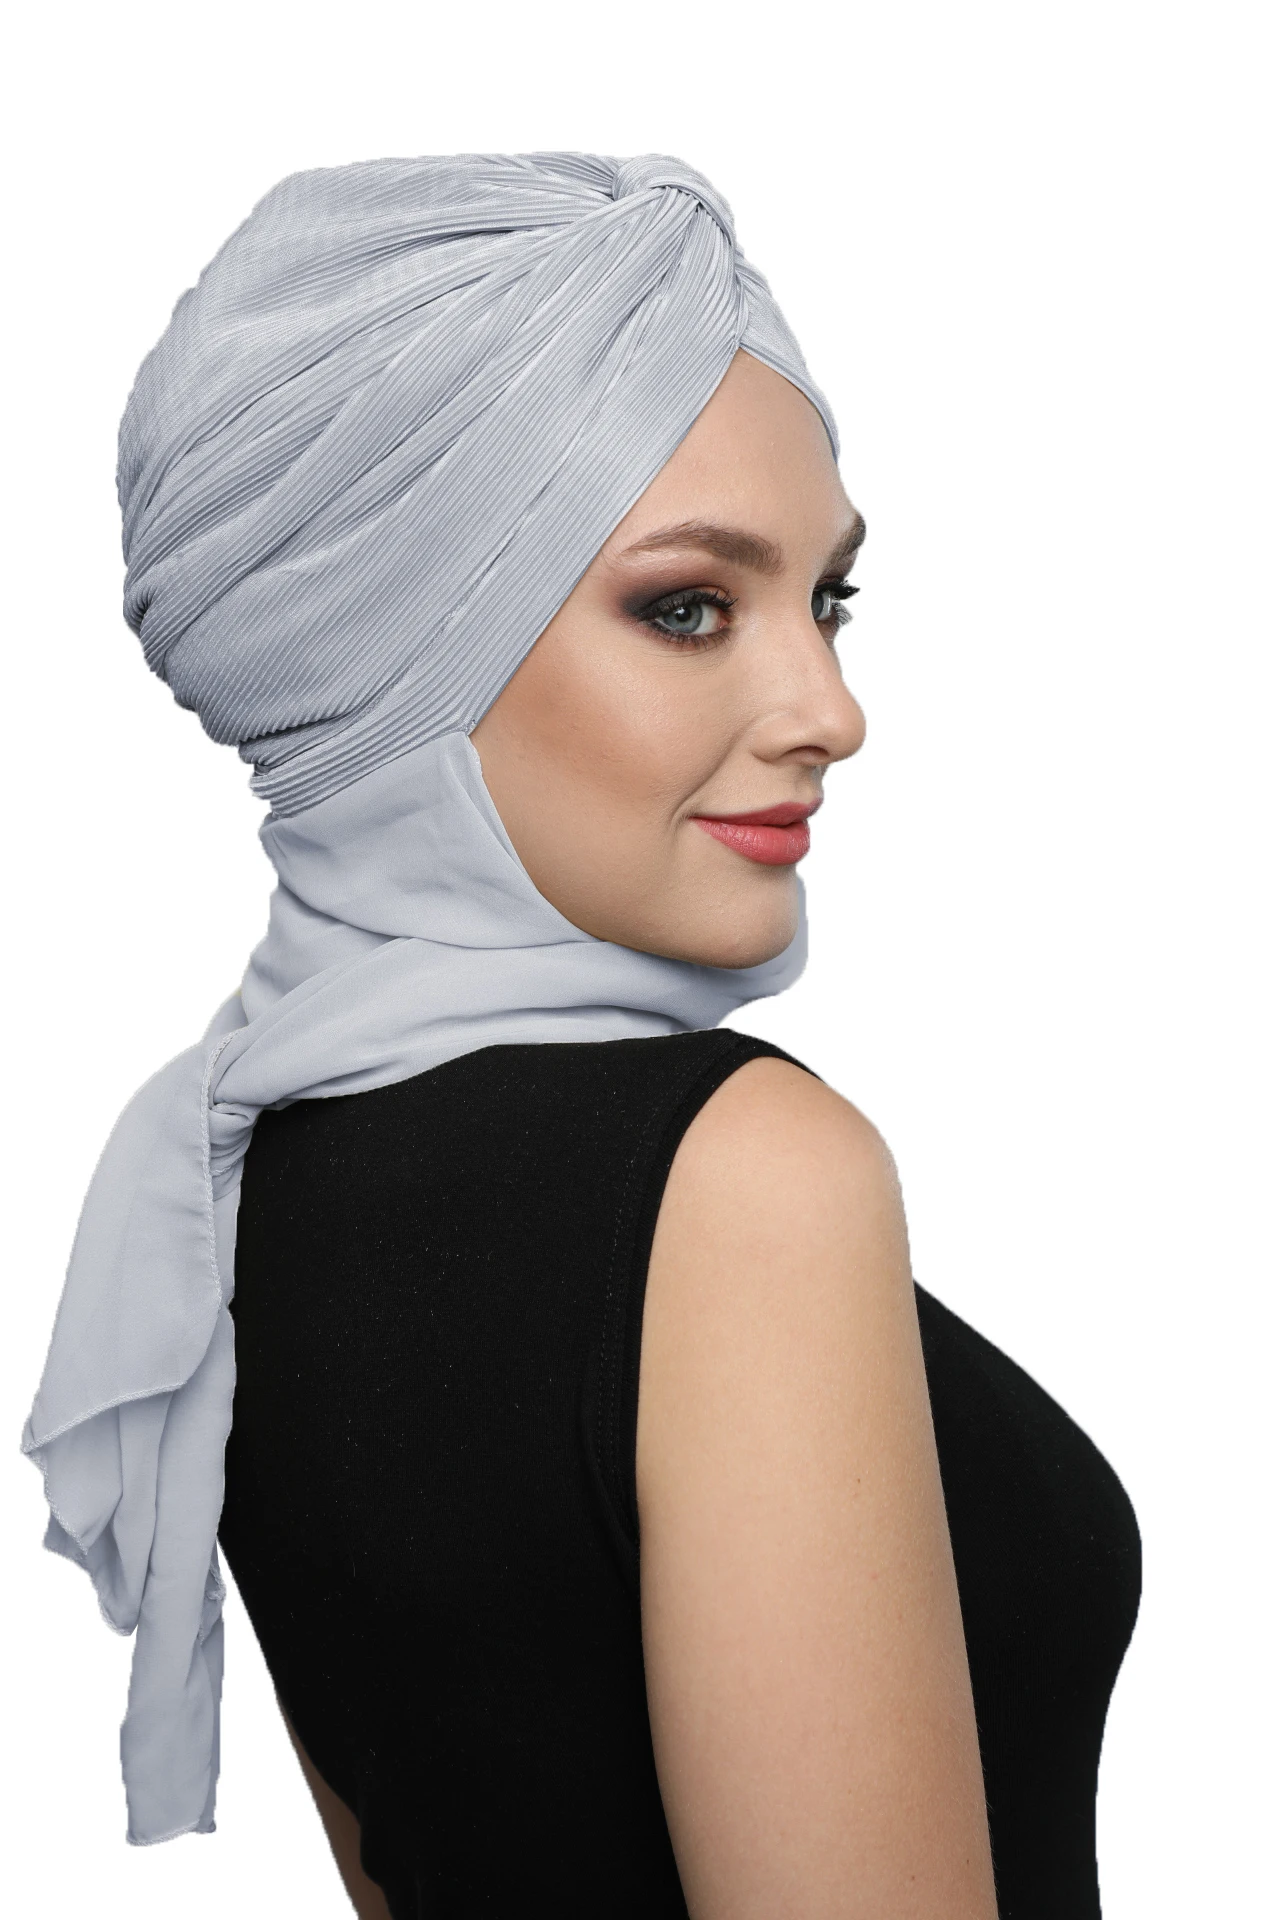 

2022 New Fashion Cross Pleat Banded With Shawl Ready Made Turban Hijab Bonnet Scarf Cancer Cap Special Women Product Beret Bandana Muslim Chemo All Season Rib Pearl Prayer Head